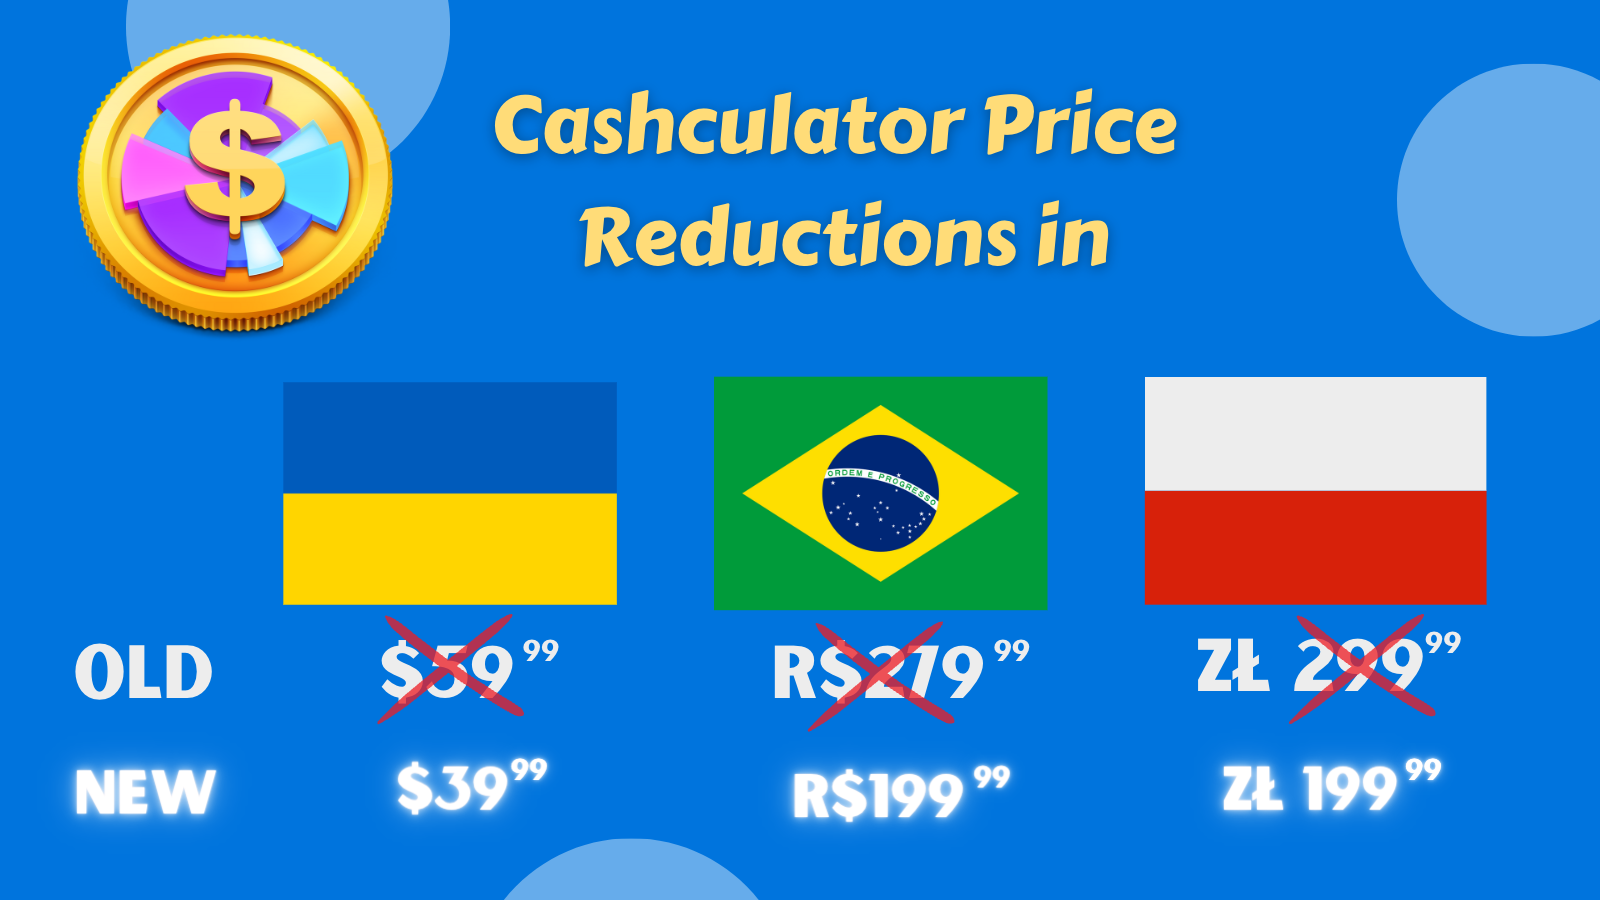 Cashculator Price Drop in Ukraine, Brazil and Poland